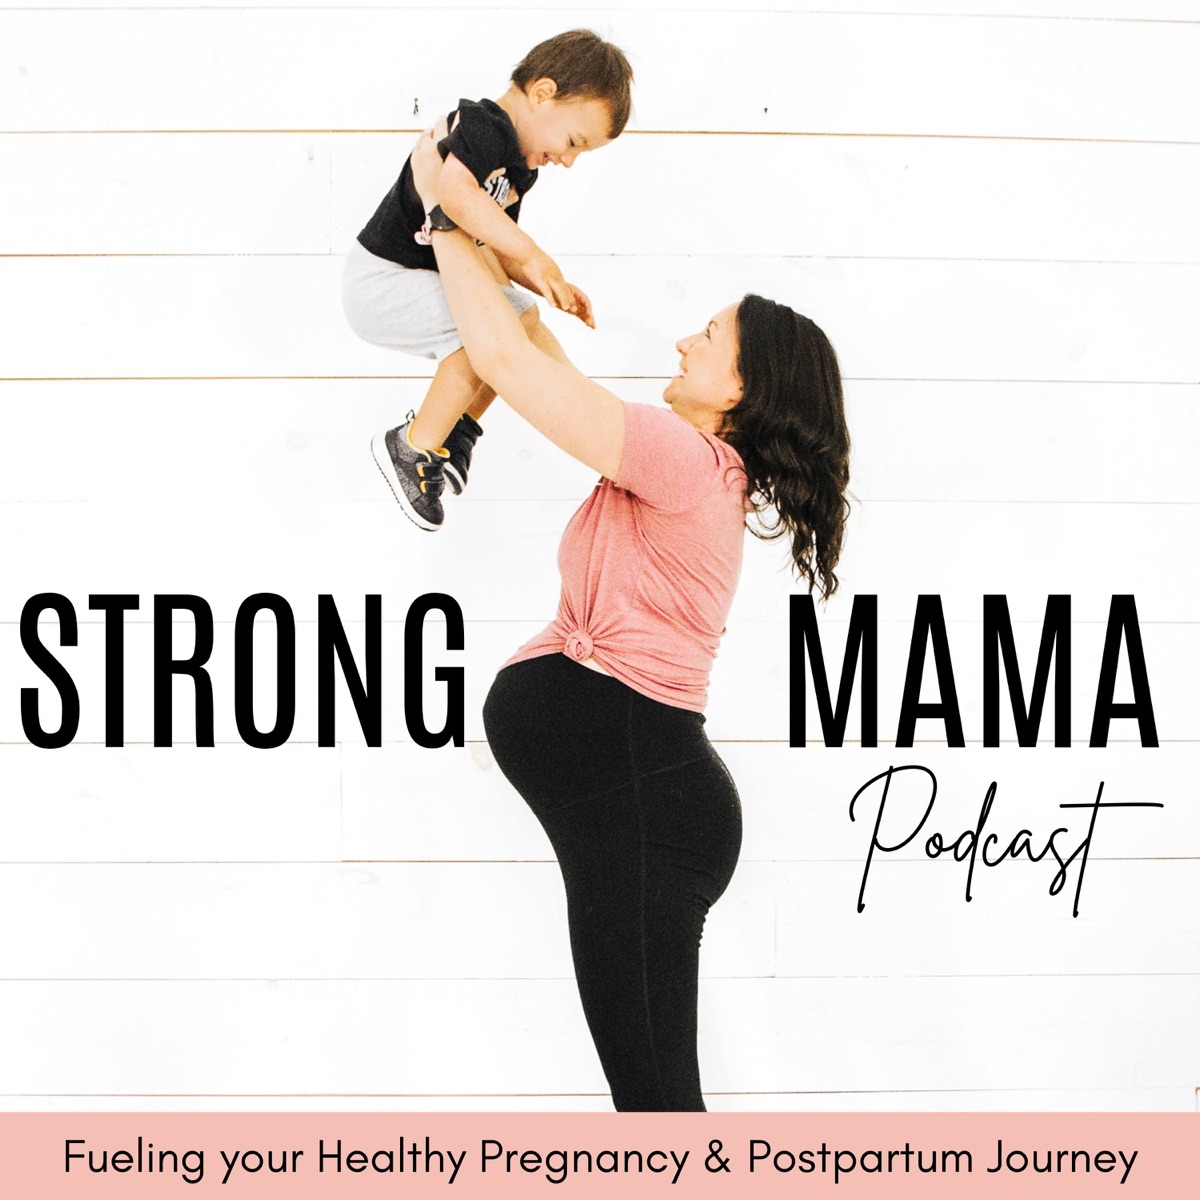 8 Simple Postpartum Exercises Guide From Expert Postpartum Fitness Coach